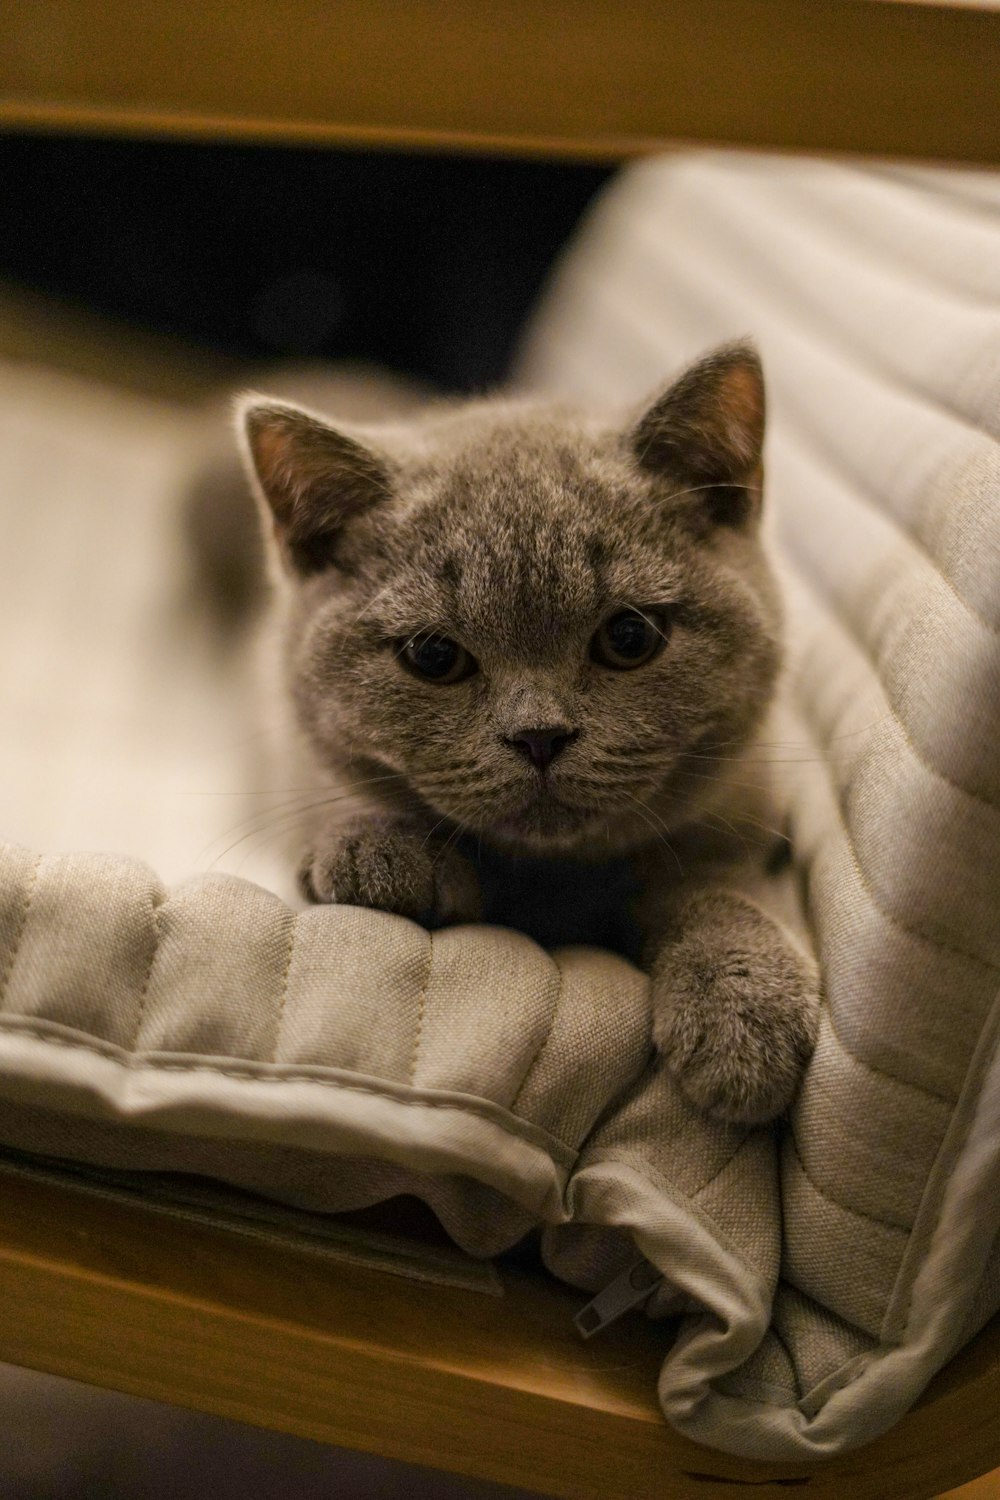 gray cat on white textile